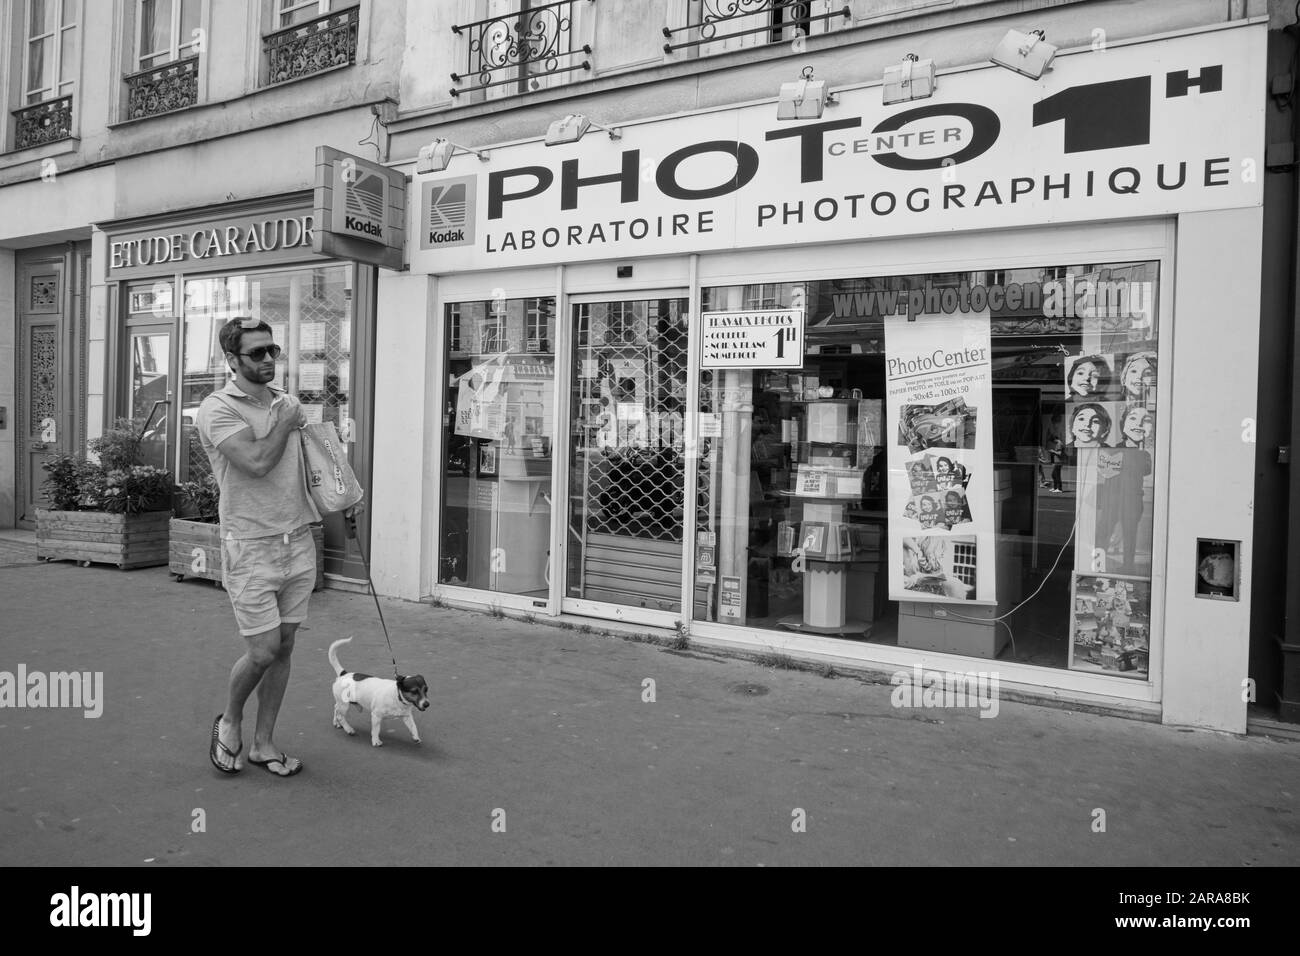 Man walking dog on pavement, Photo Center, Rue Saint Antoine, Paris, France, Europe Stock Photo